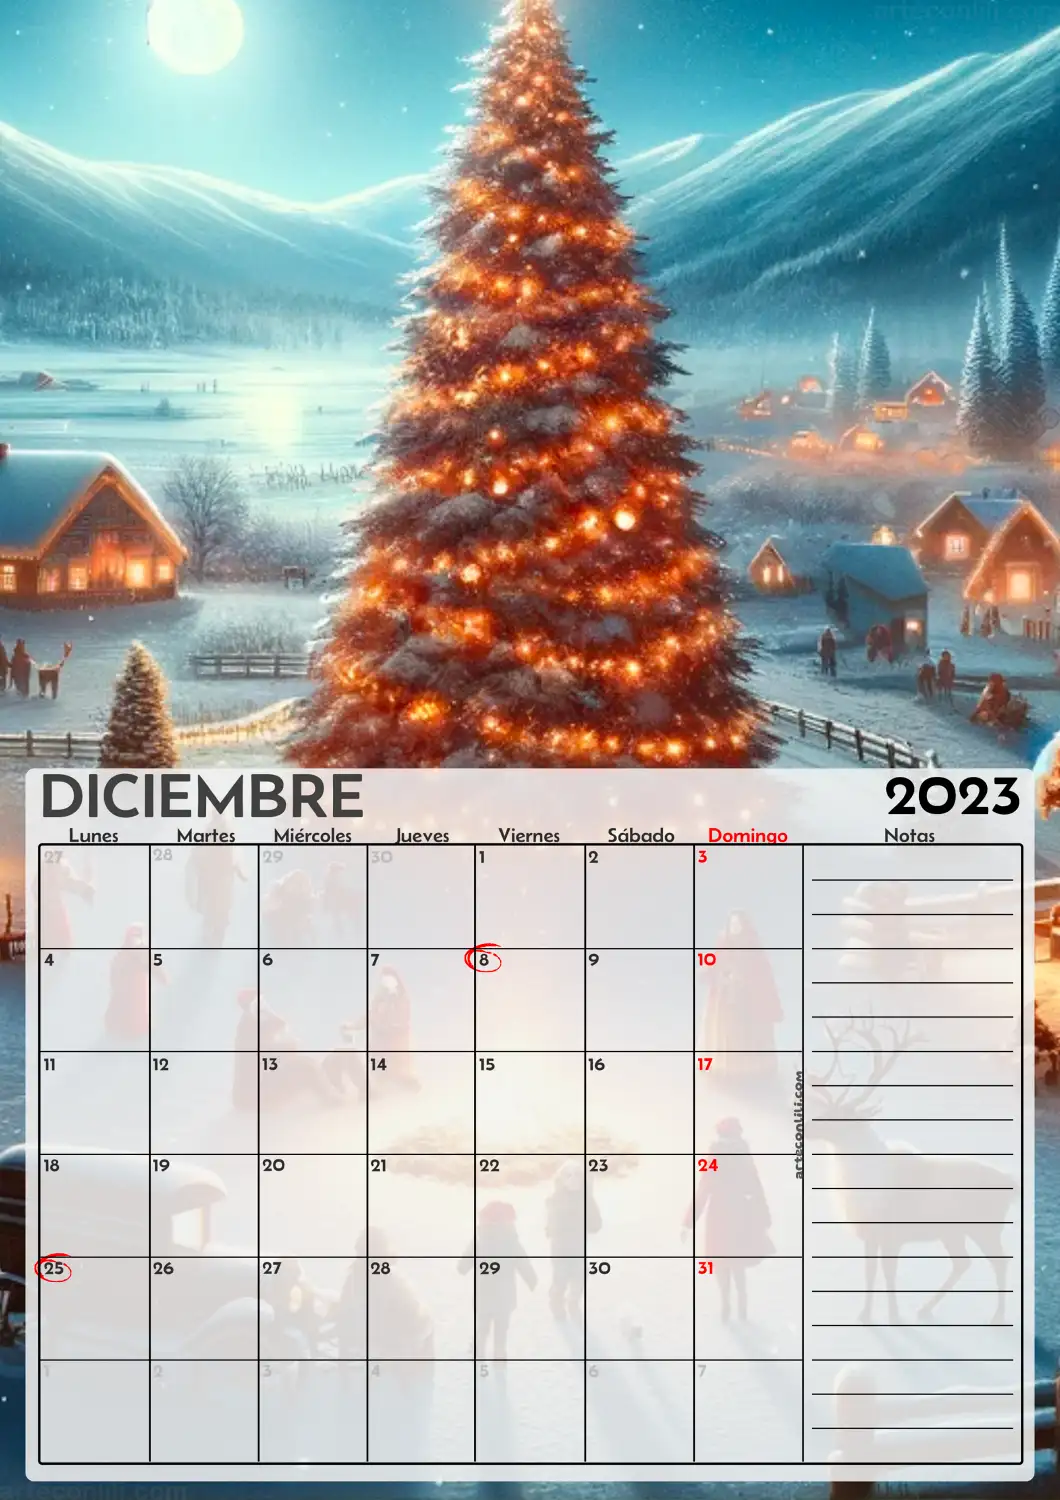 calendario diciembre 2023 motivos navidad arteconlili.com1